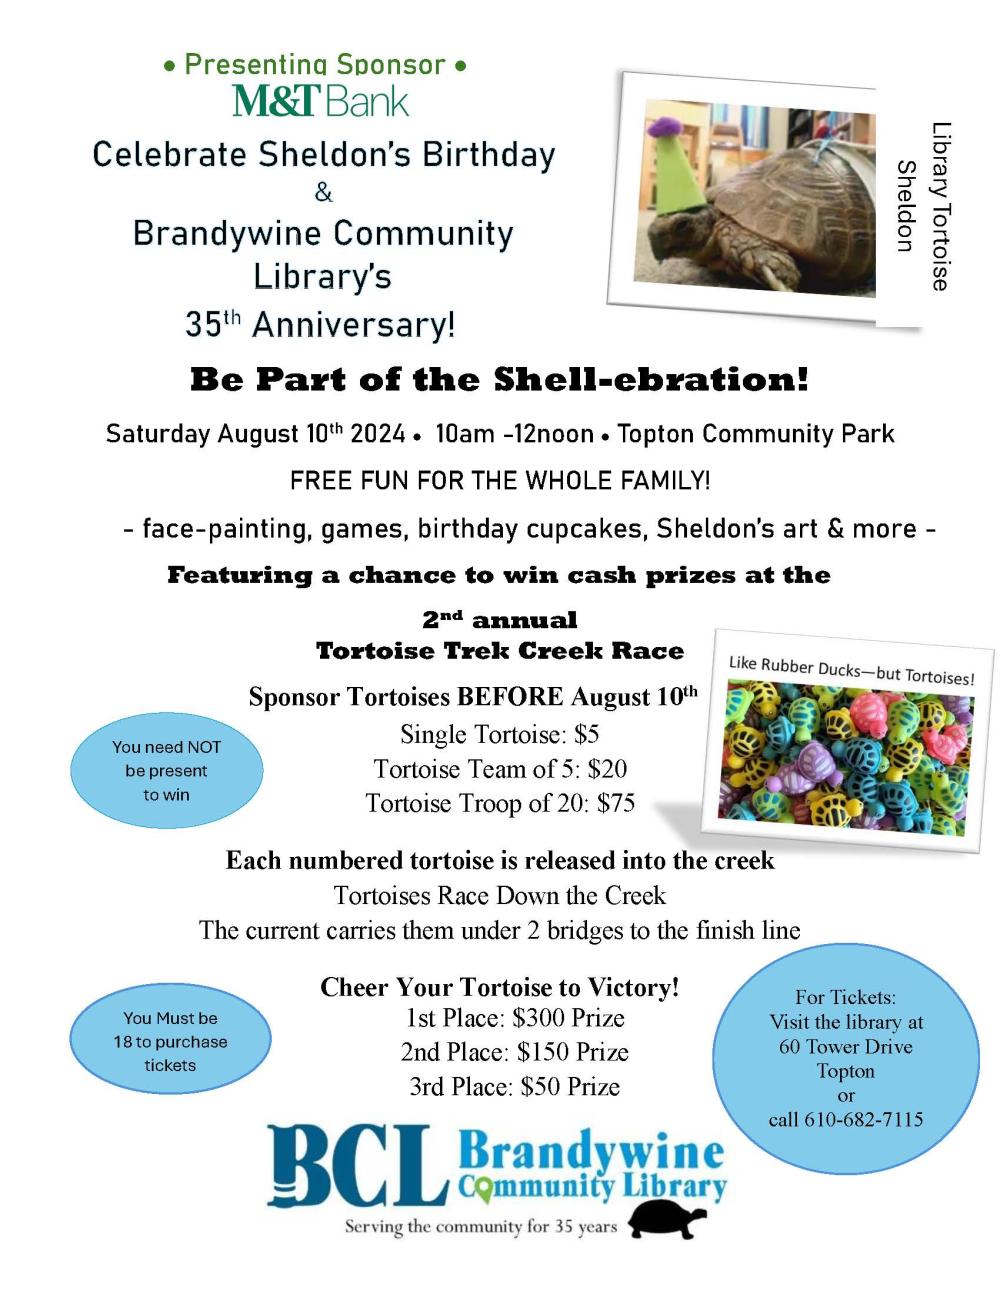 tortoise creek race and sheldon birthday party flyer